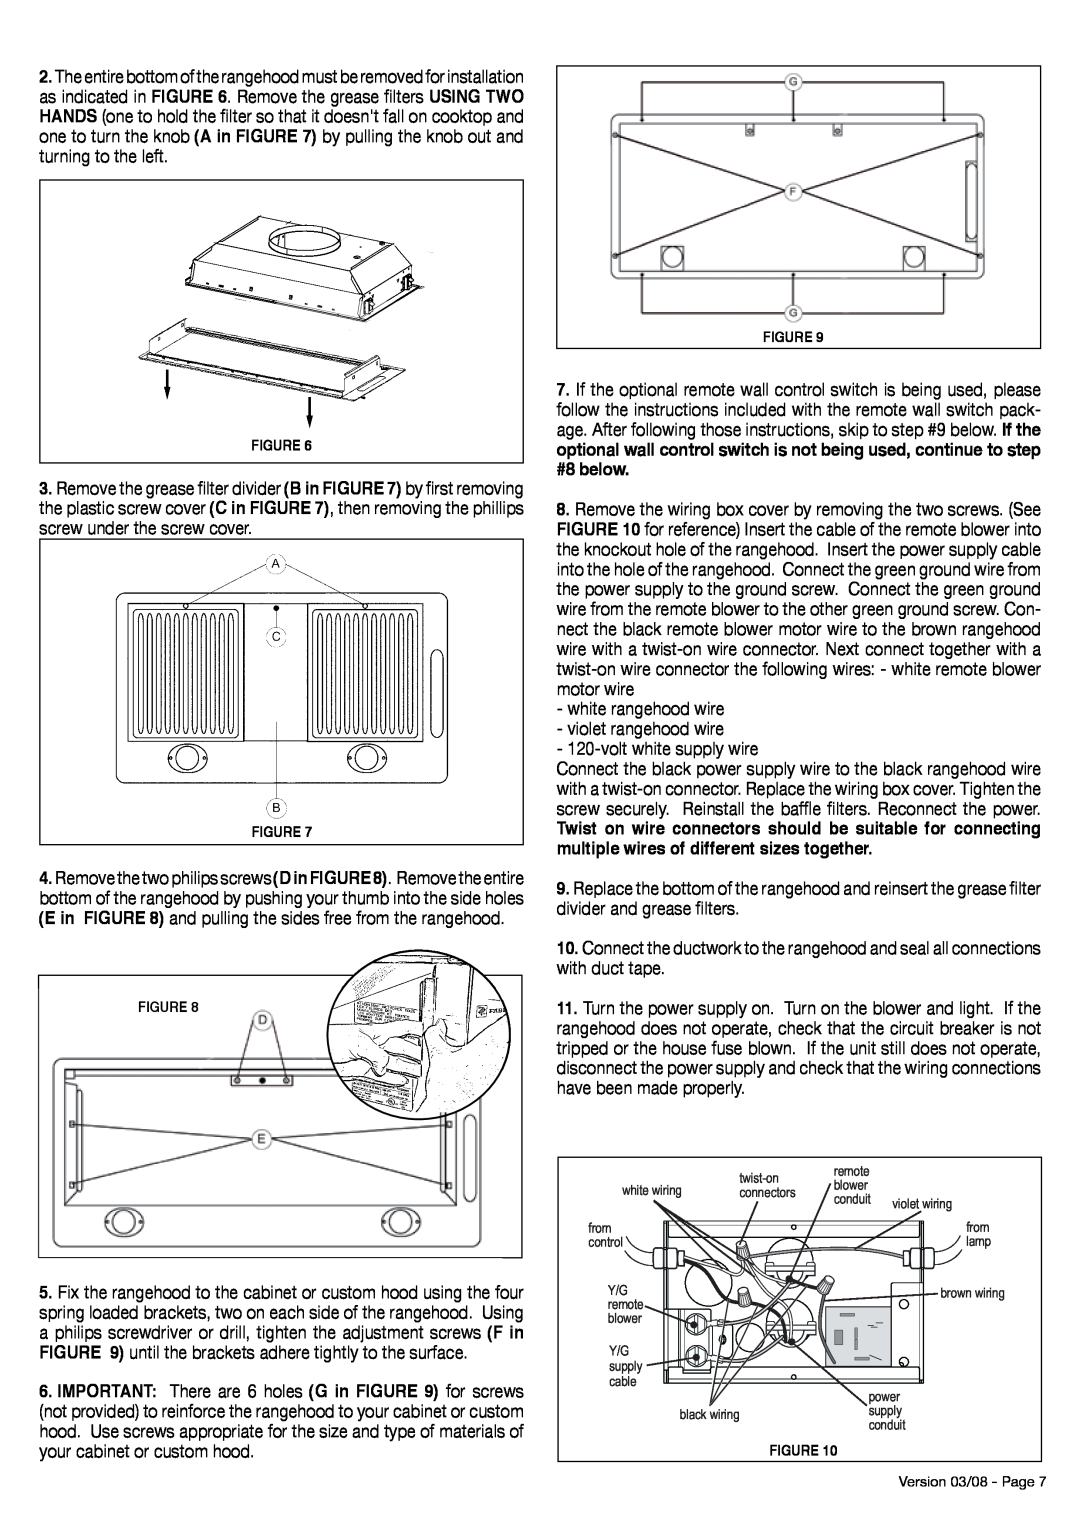 Faber 630003952 installation instructions voltwhite supply wire 